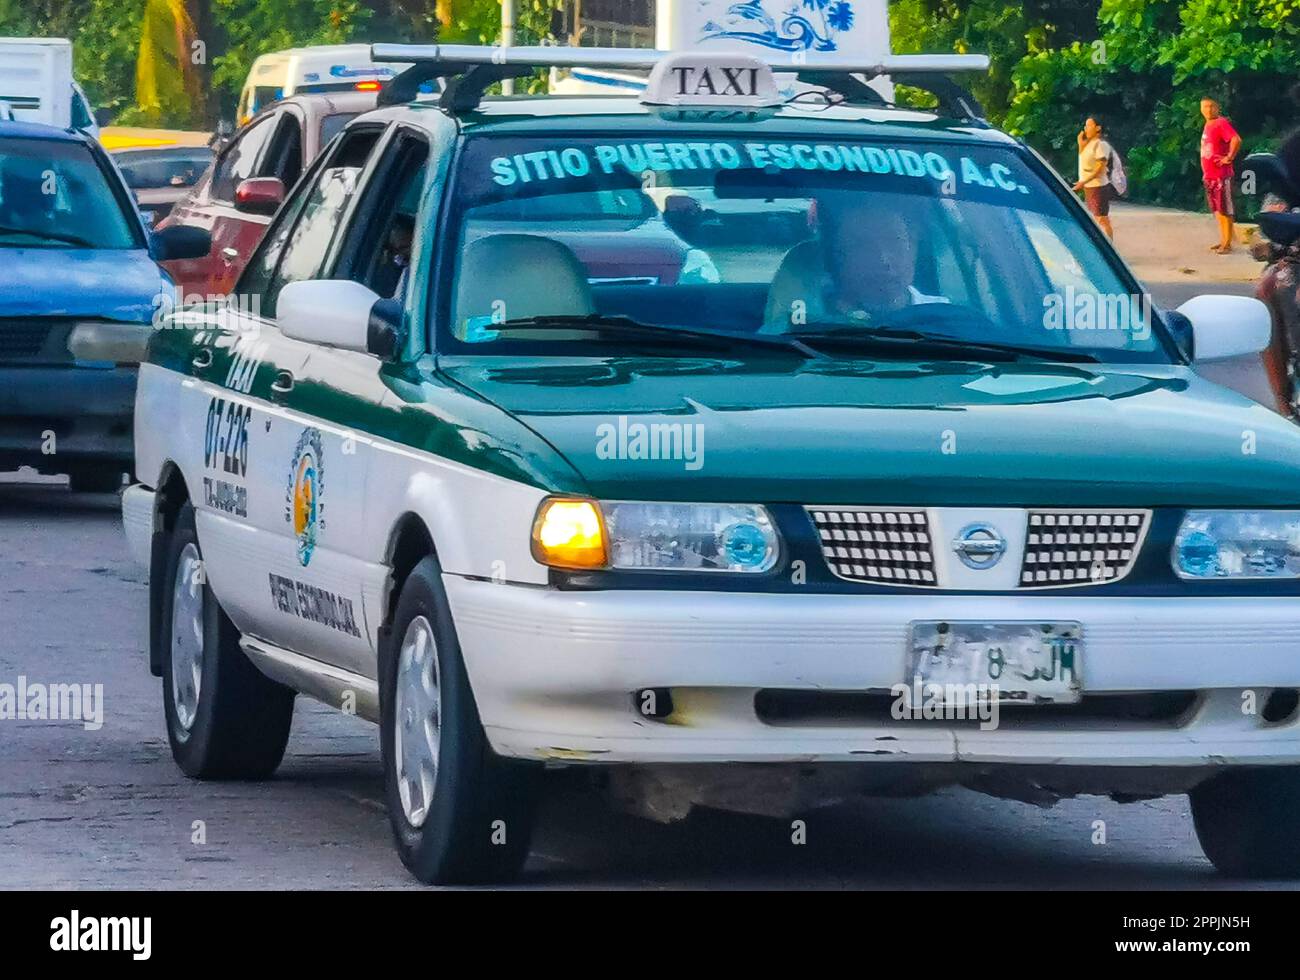 Green turquoise blue taxi cab car in Puerto Escondido Mexico. Stock Photo